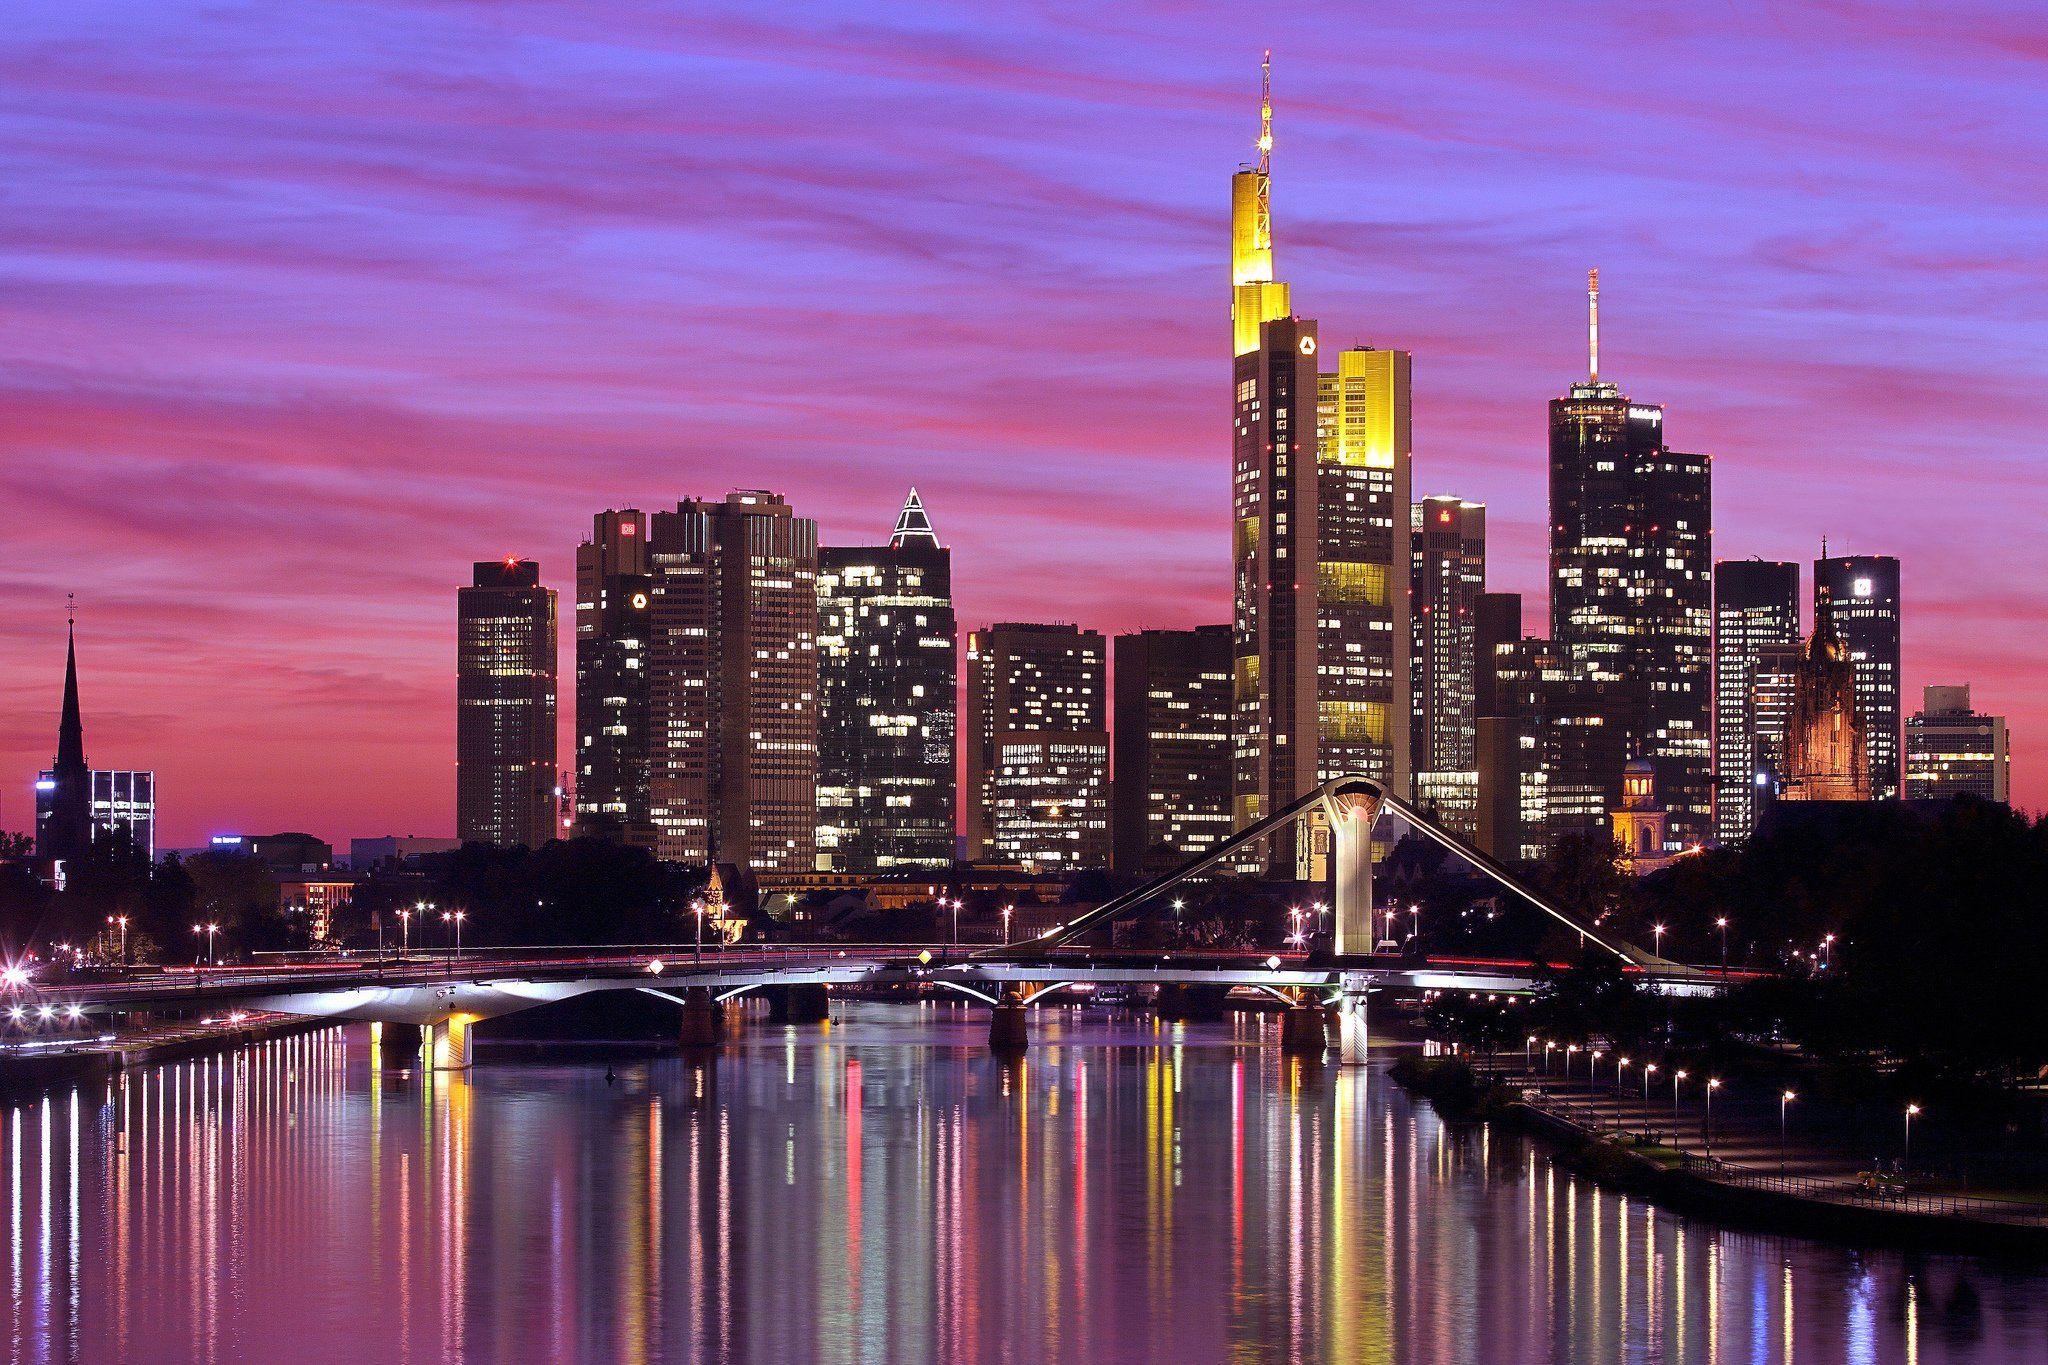 Deutschland Germany Frankfurt am Main city river bridge lights